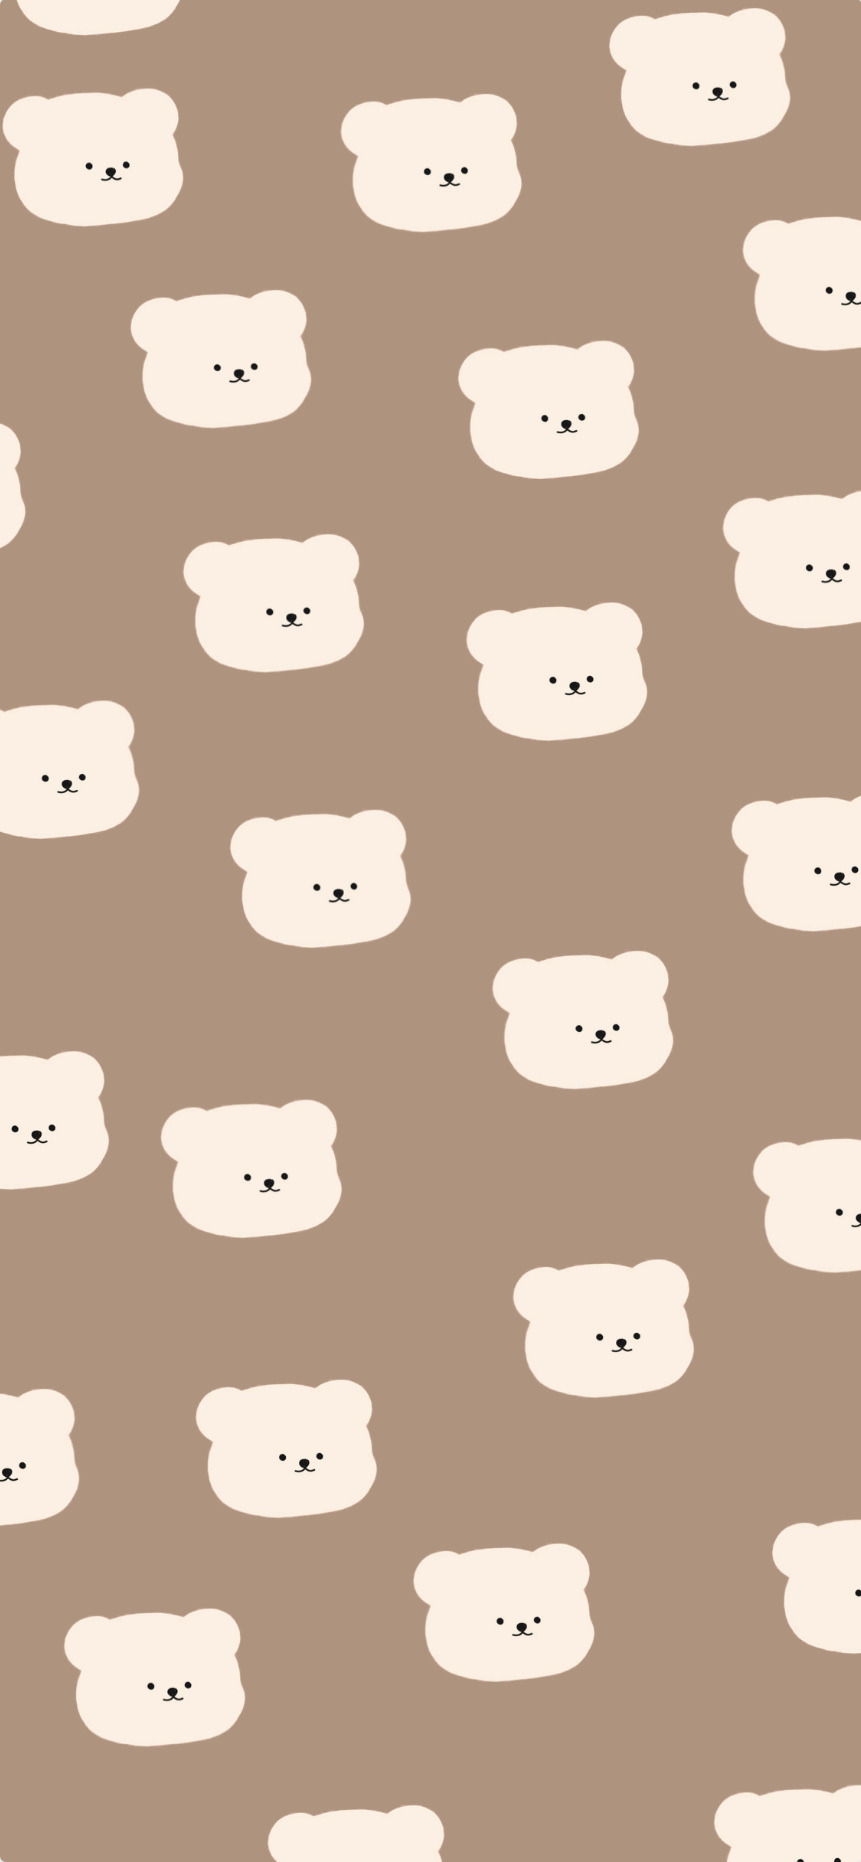 Cute Brown Bear Wallpapers